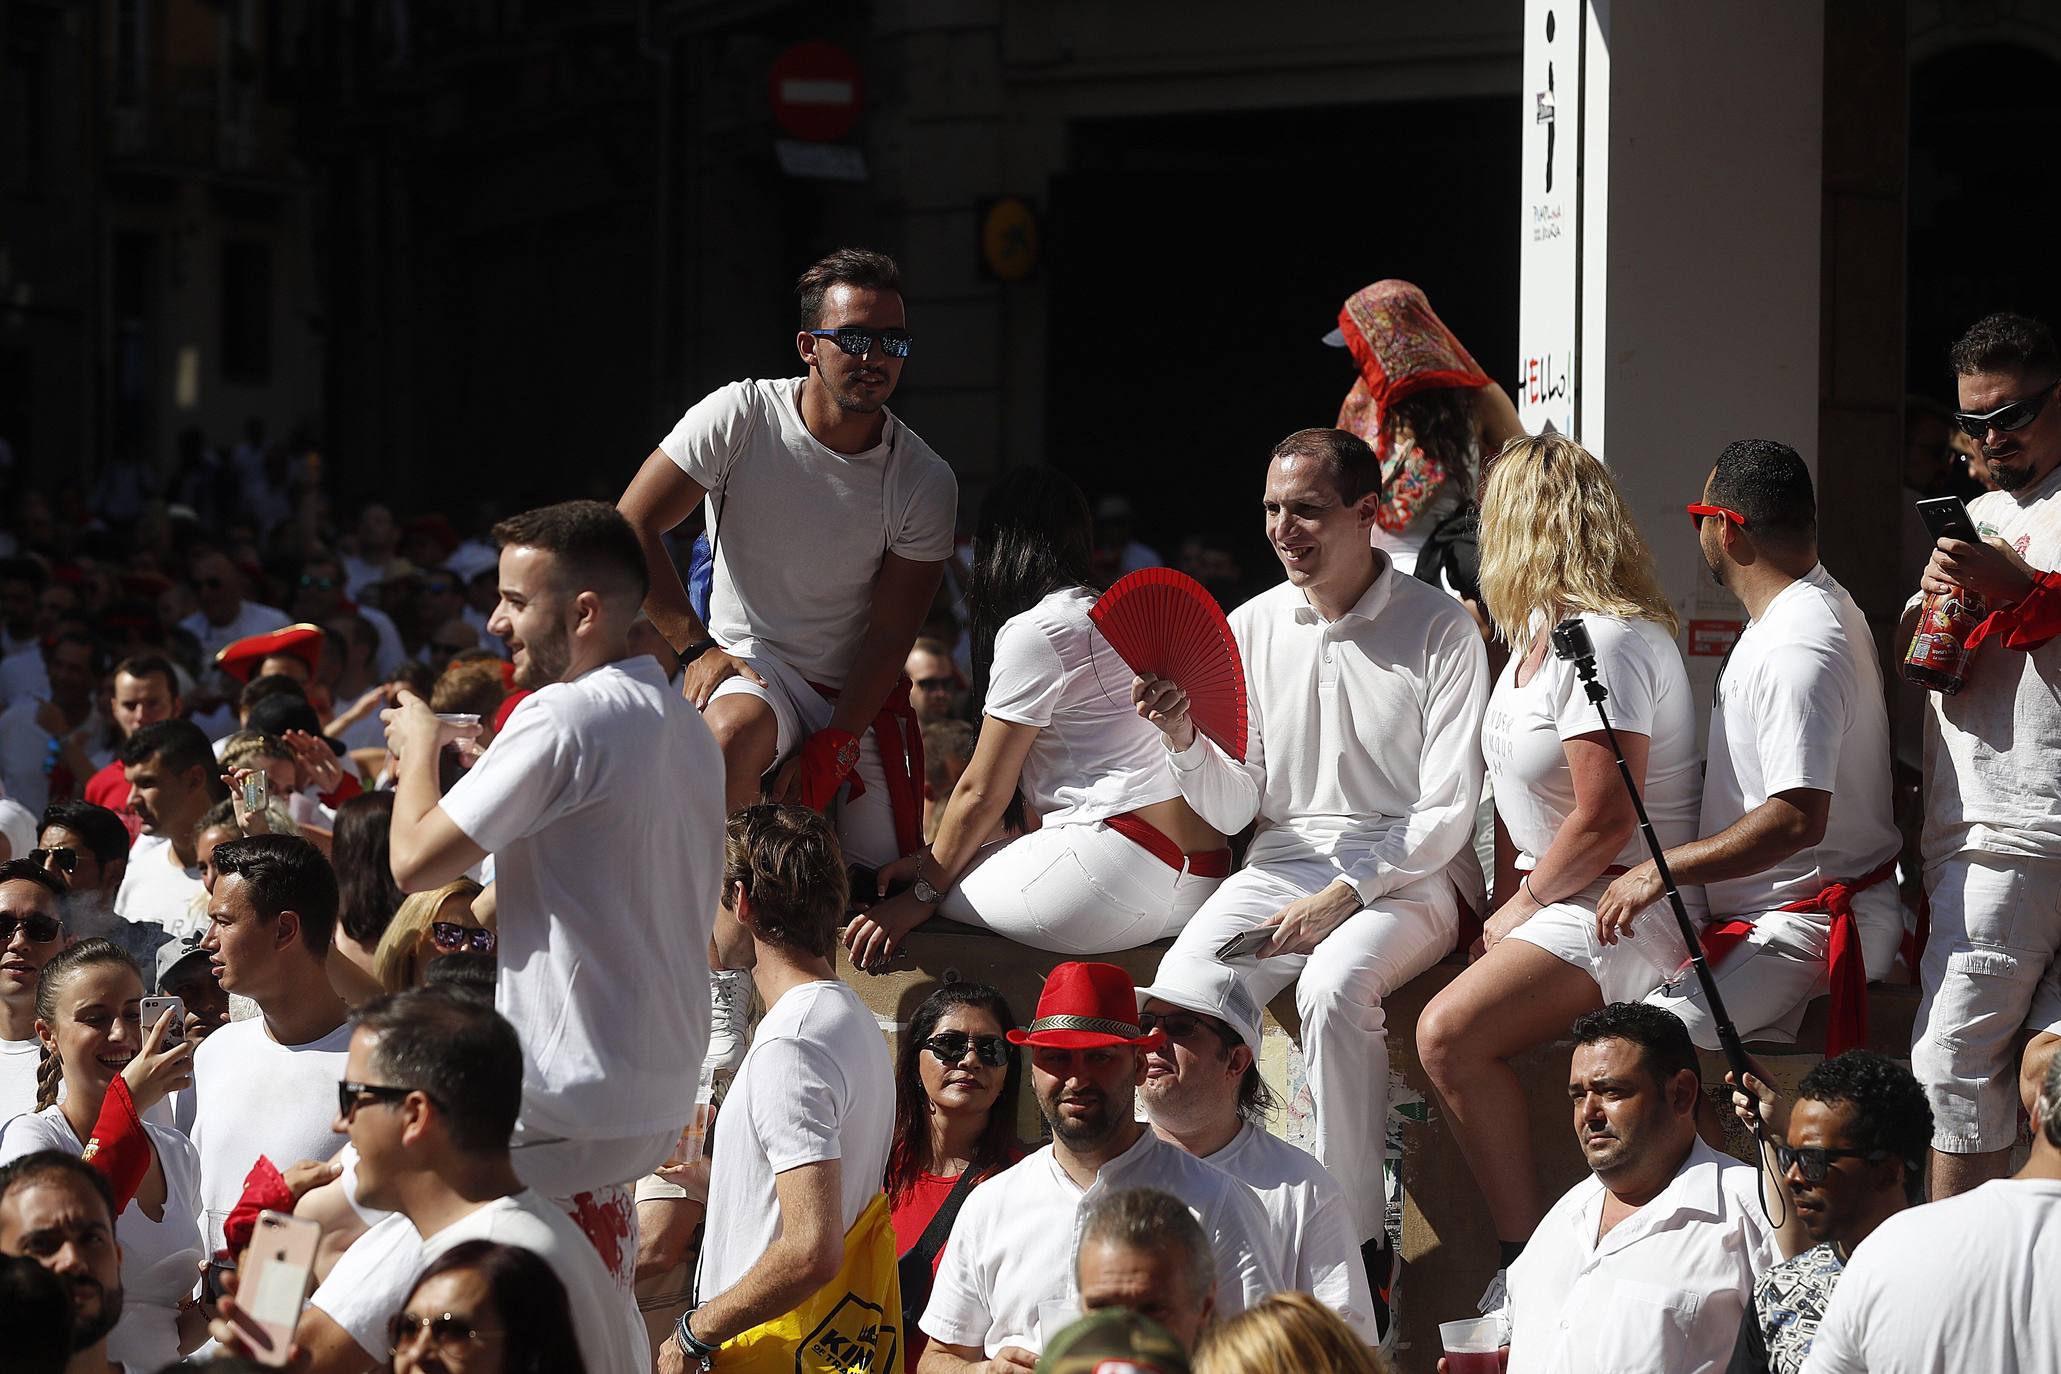 Fotos: Pamplona dispara la fiesta